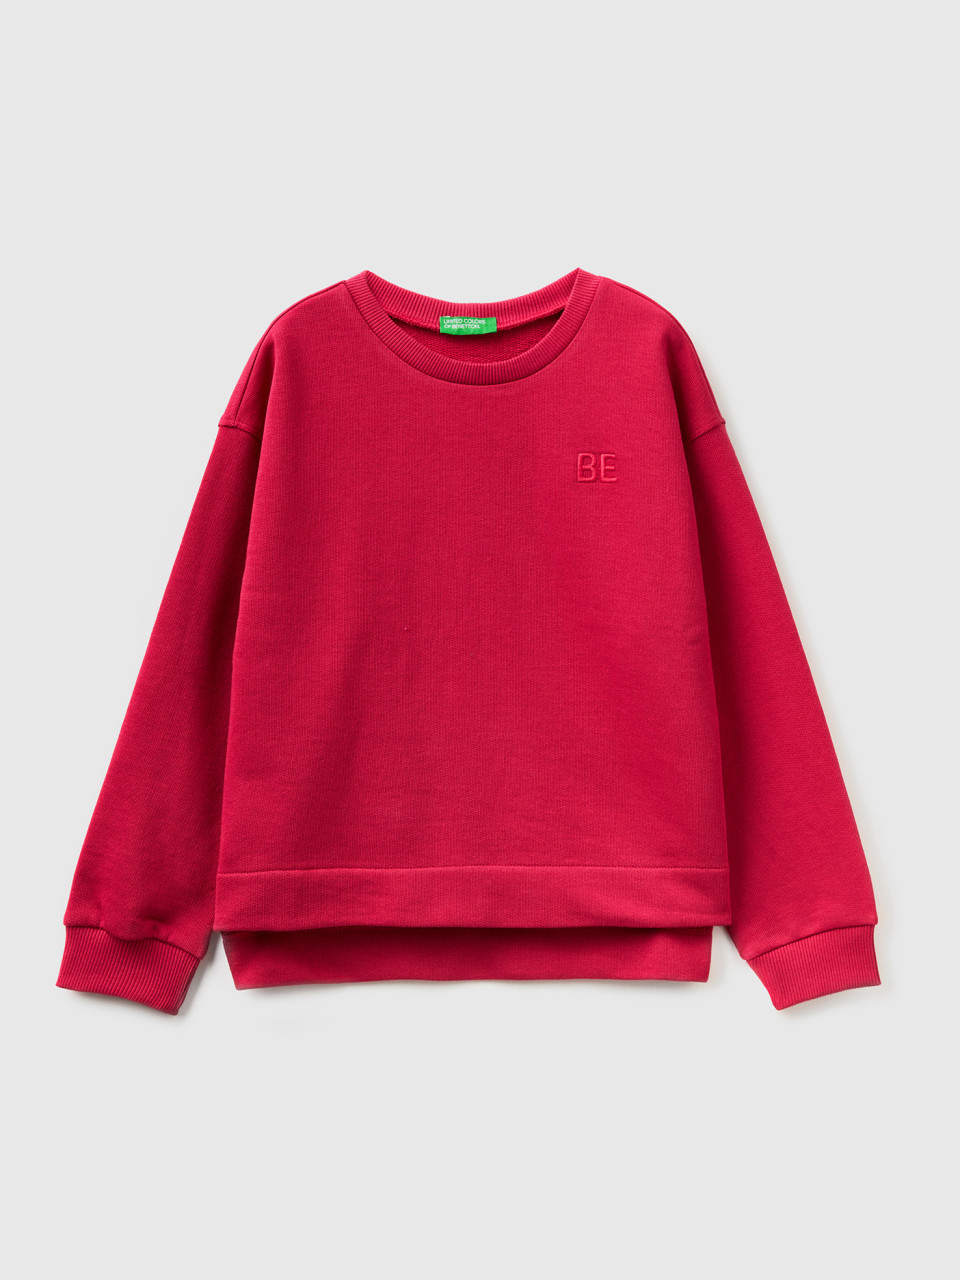 Benetton, Sweatshirt With be Embroidery, Cyclamen, Kids